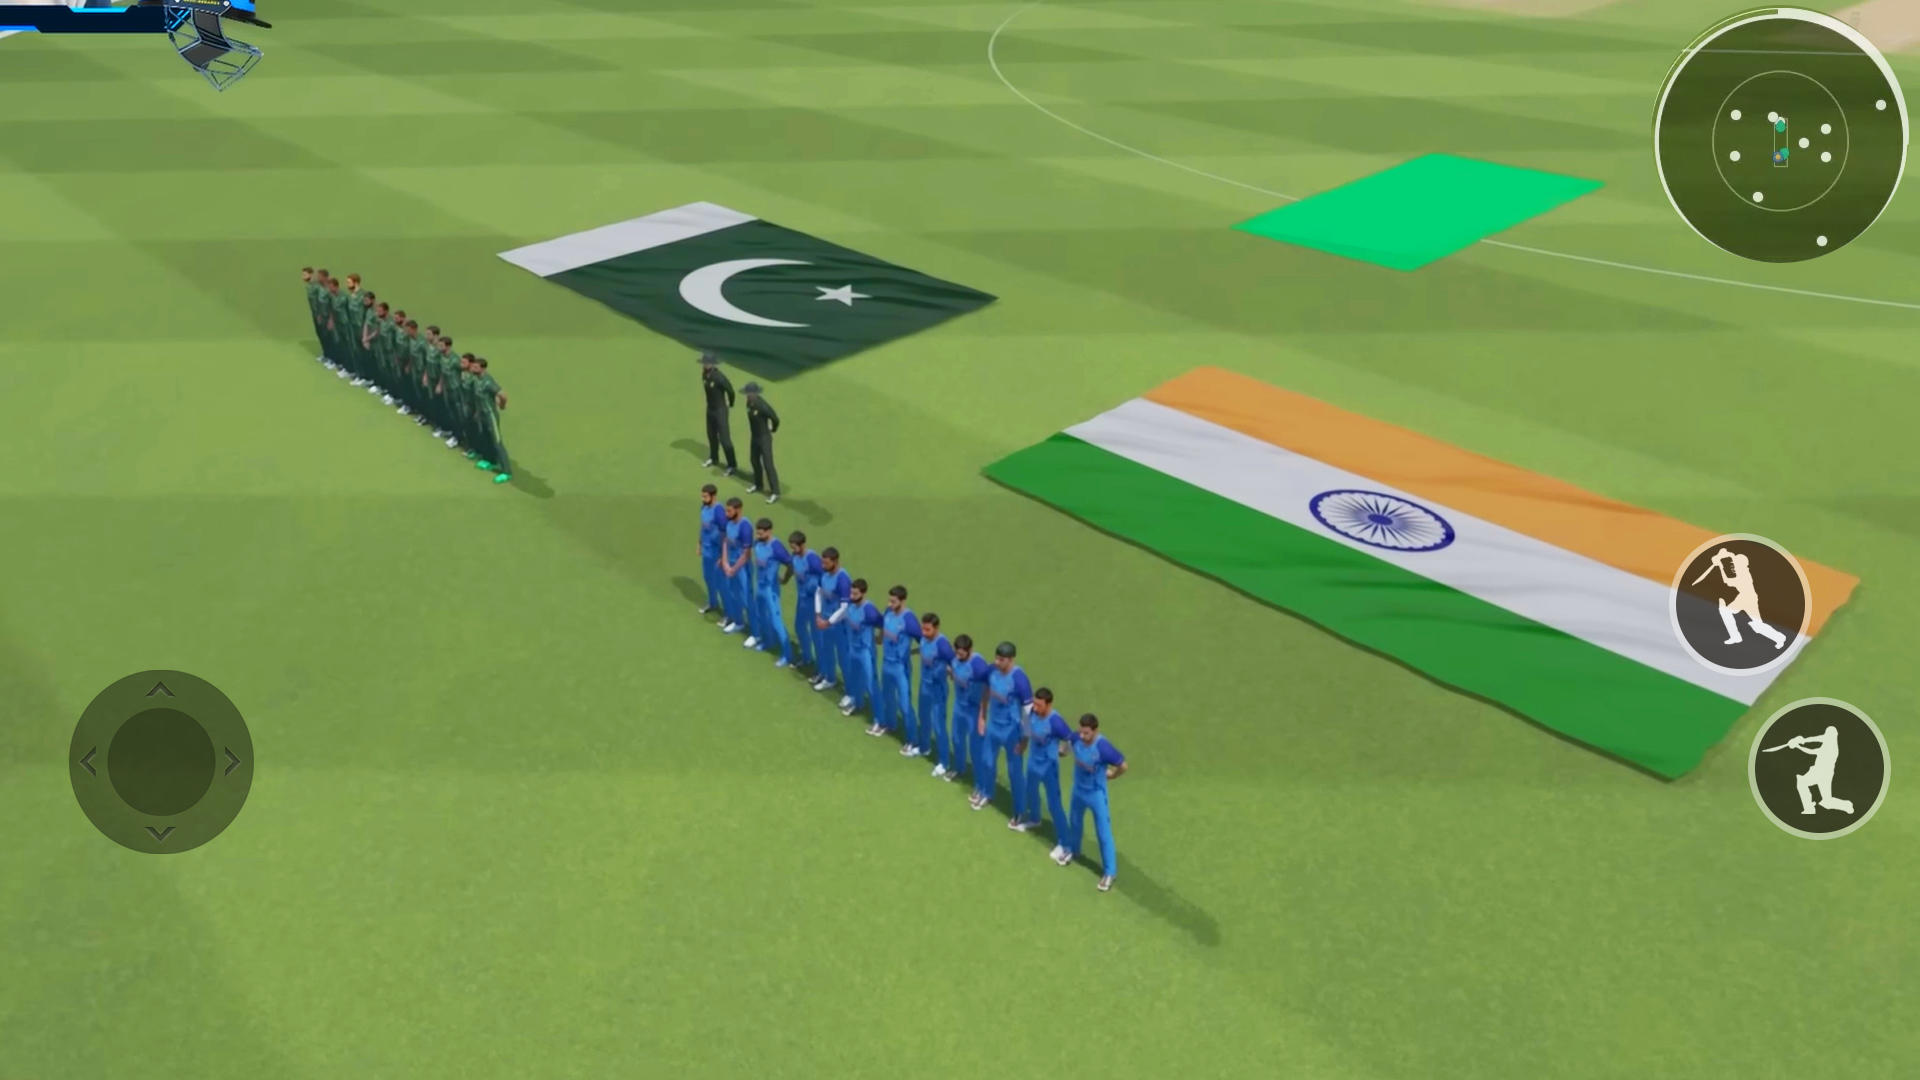 Screenshot of Cricket Cup Game : Ind vs Pak